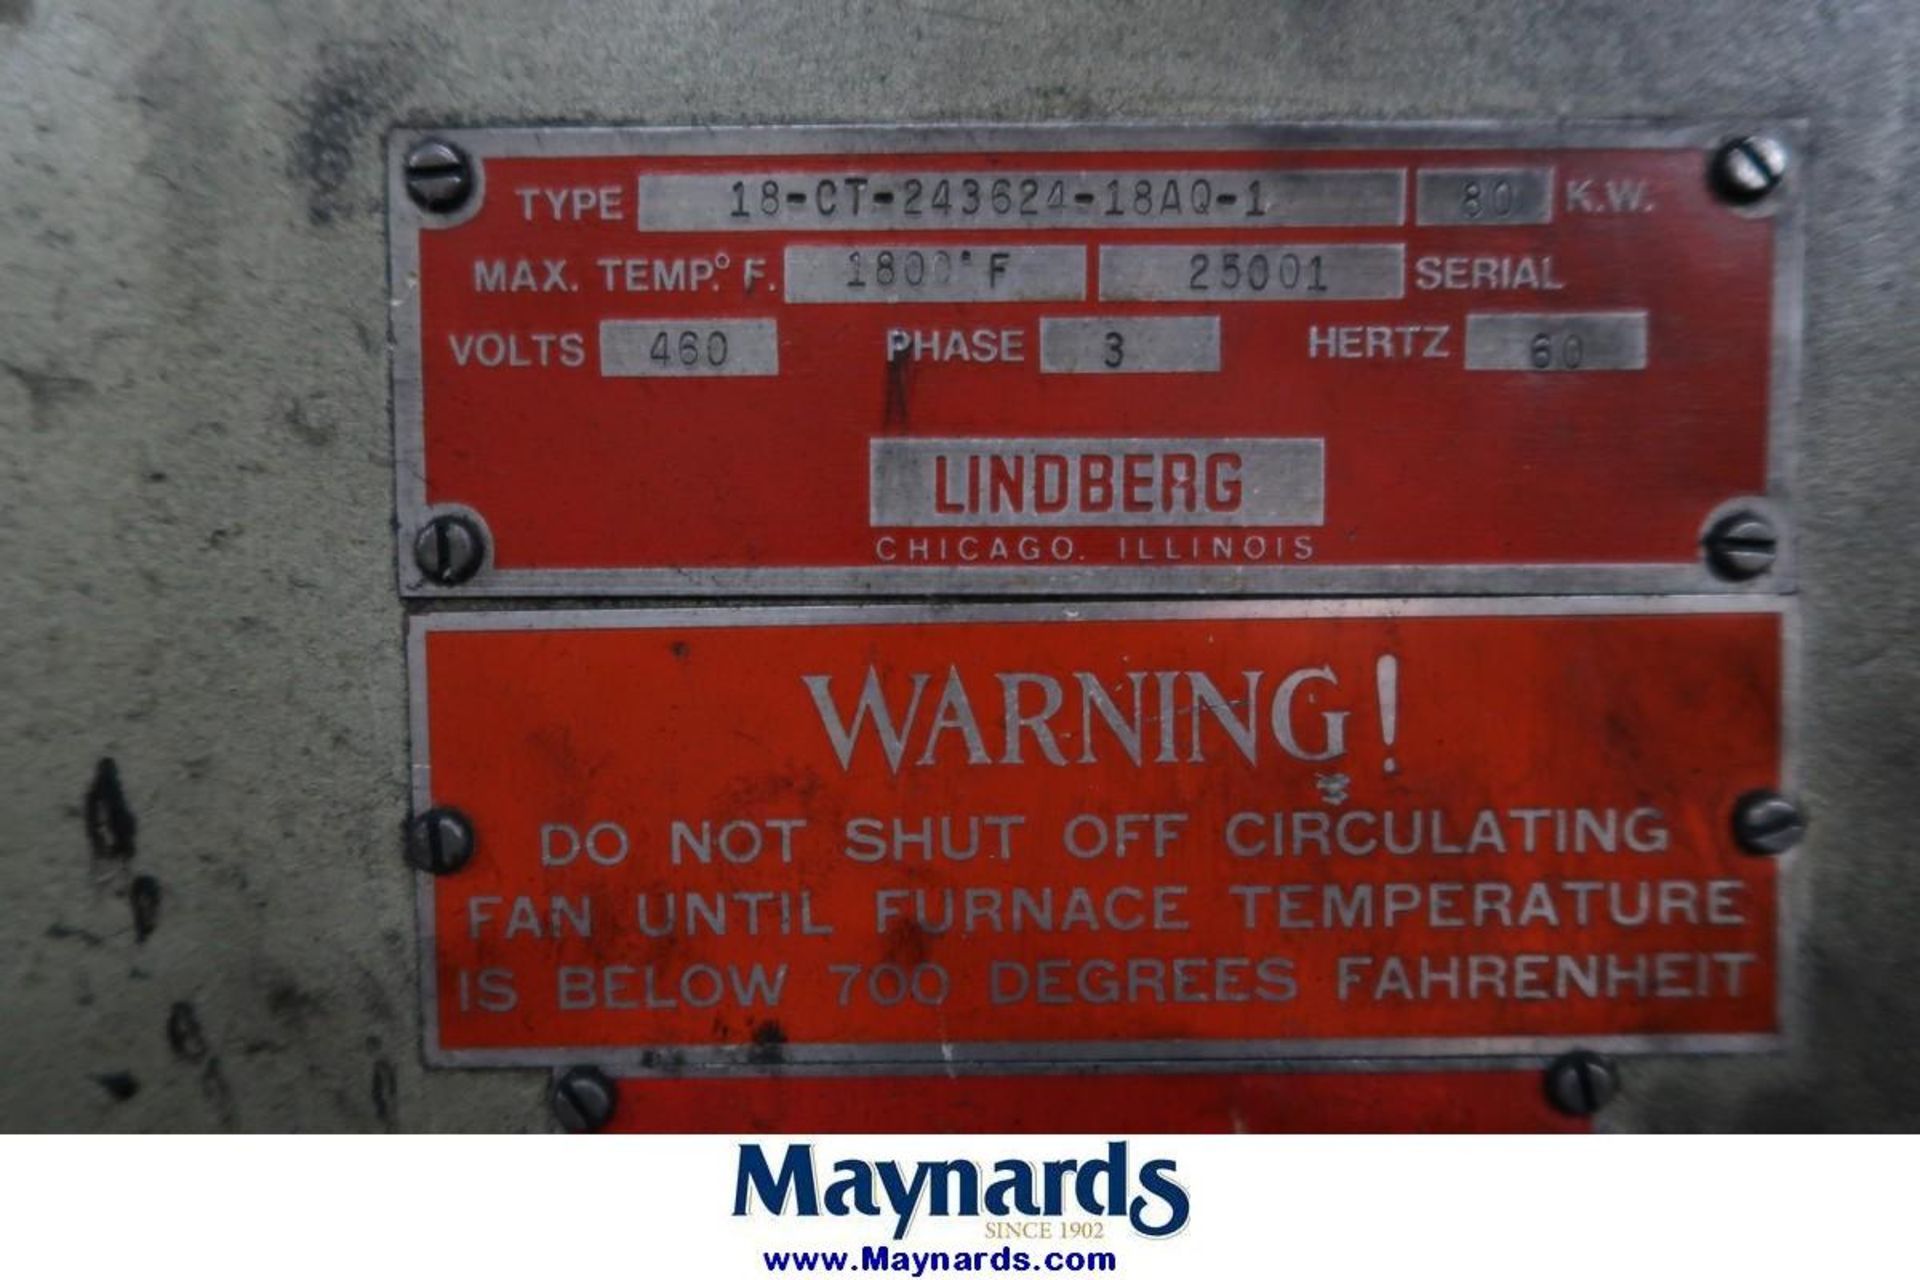 Lindberg 13-CT-243624-18AQ-1 Heat Treat Furnace - Image 5 of 9